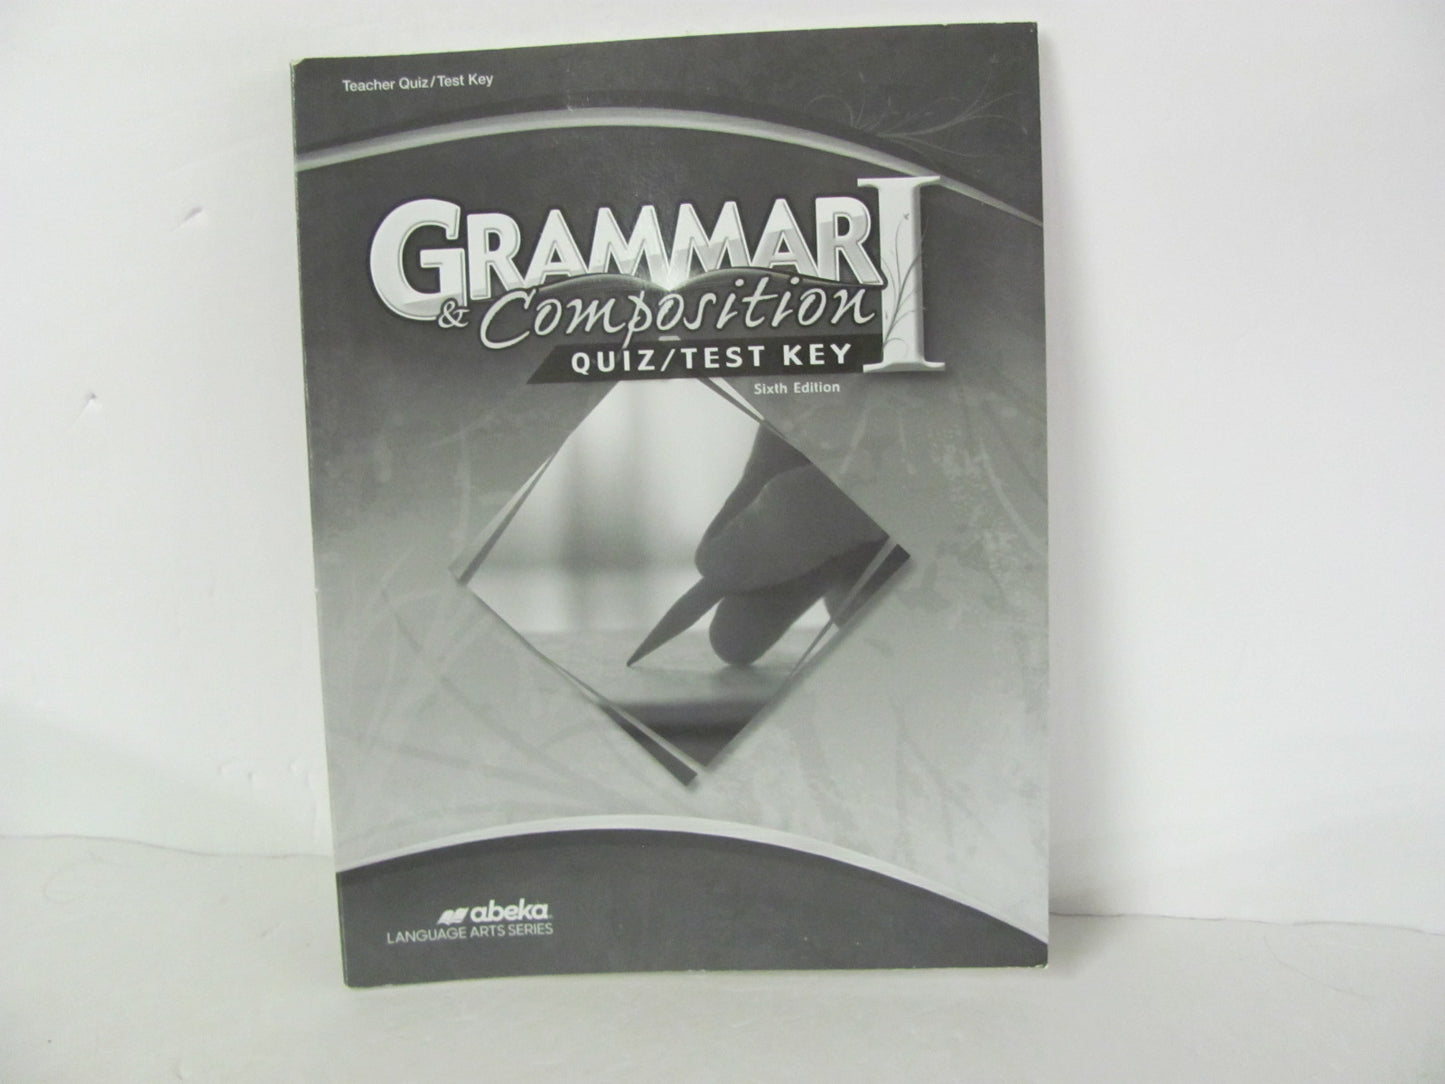 Grammar I Abeka Quiz/Test Key  Pre-Owned 7th Grade Language Textbooks